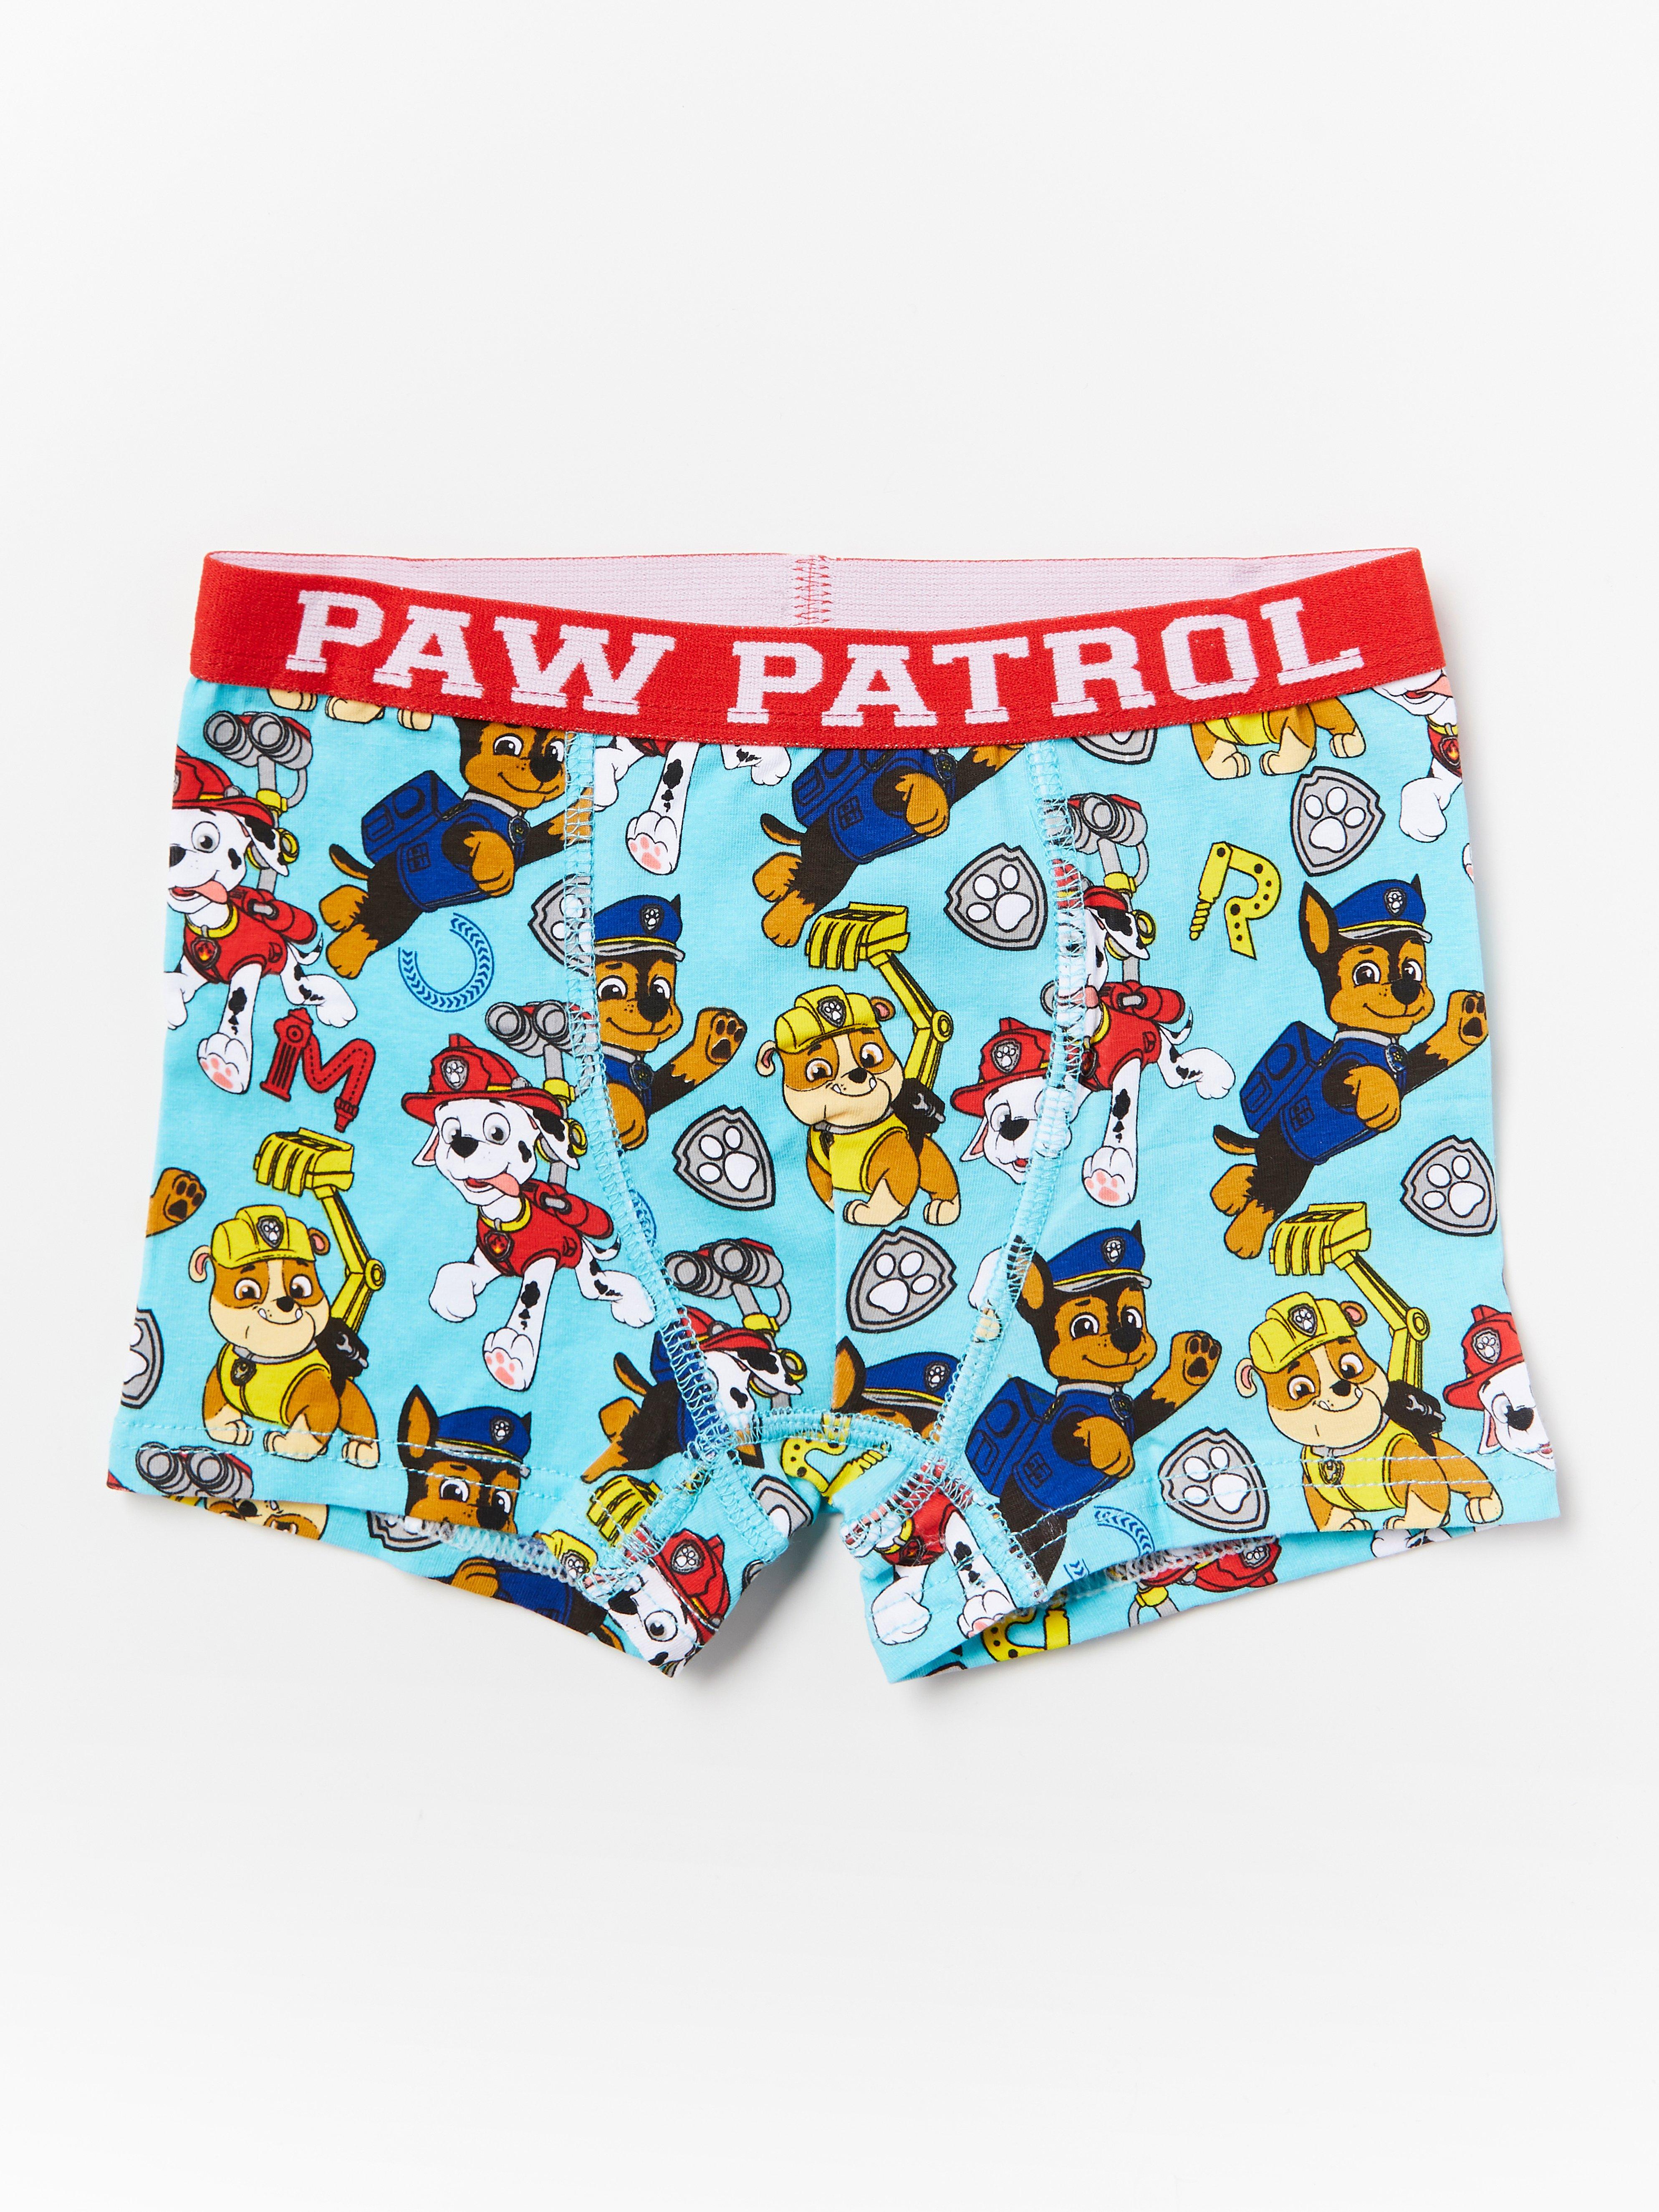 Boxer Shorts Paw Patrol